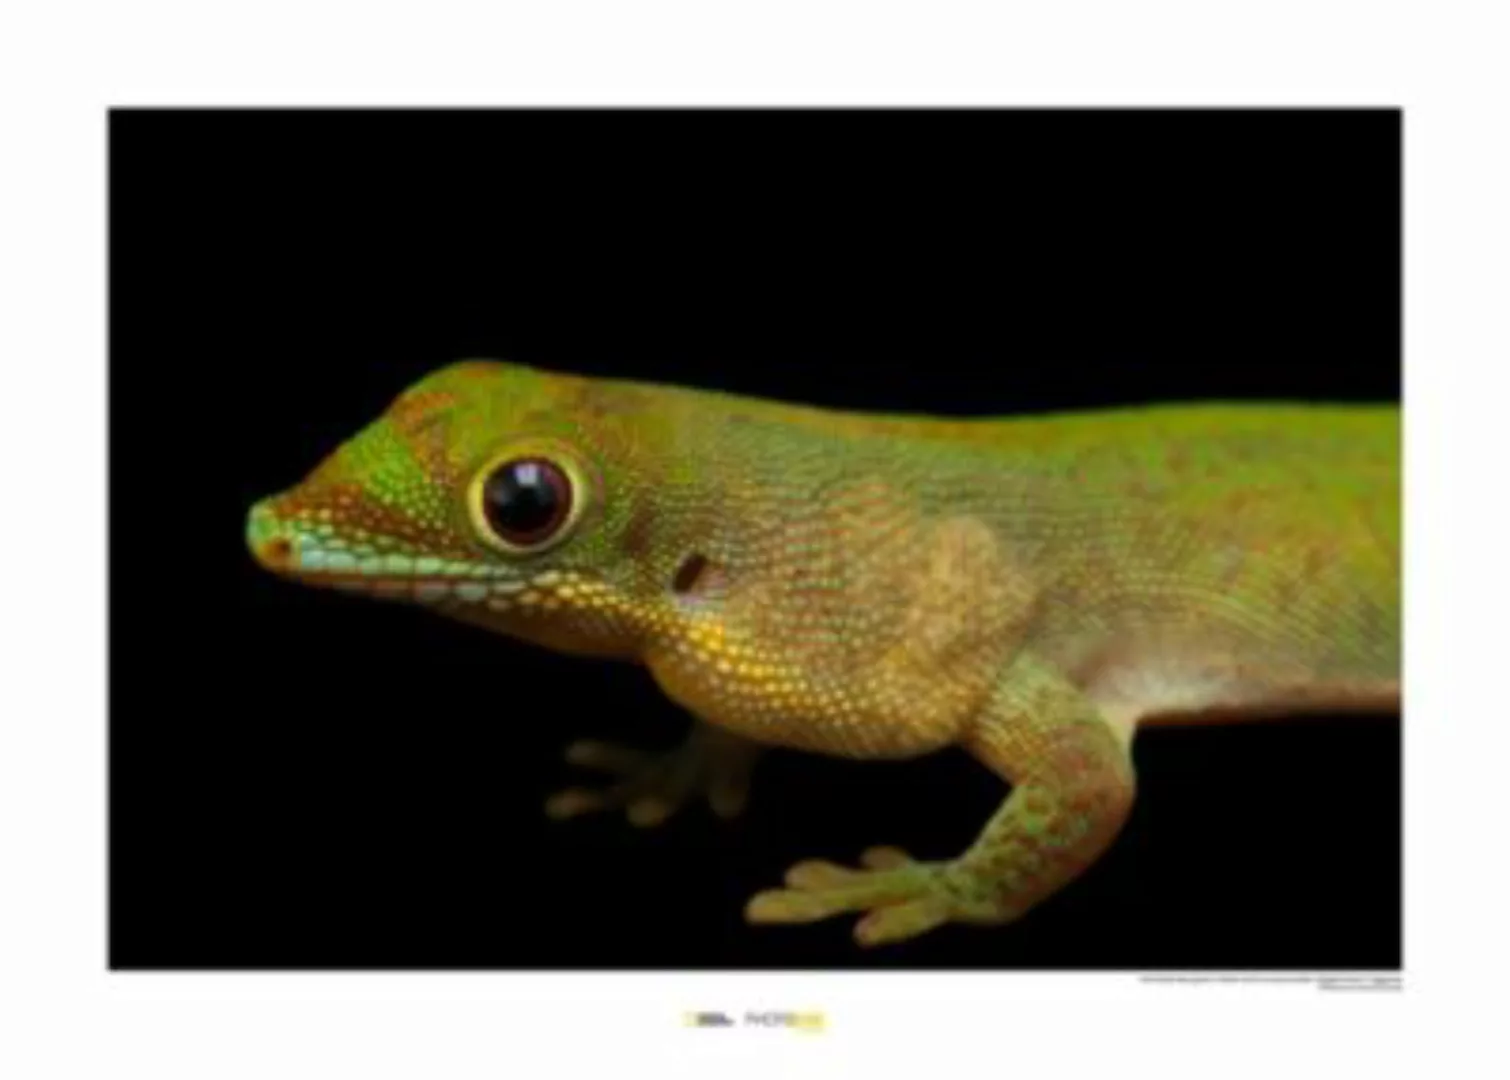 KOMAR Wandbild - Flat-tailed Day Gecko - Größe: 70 x 50 cm mehrfarbig Gr. o günstig online kaufen